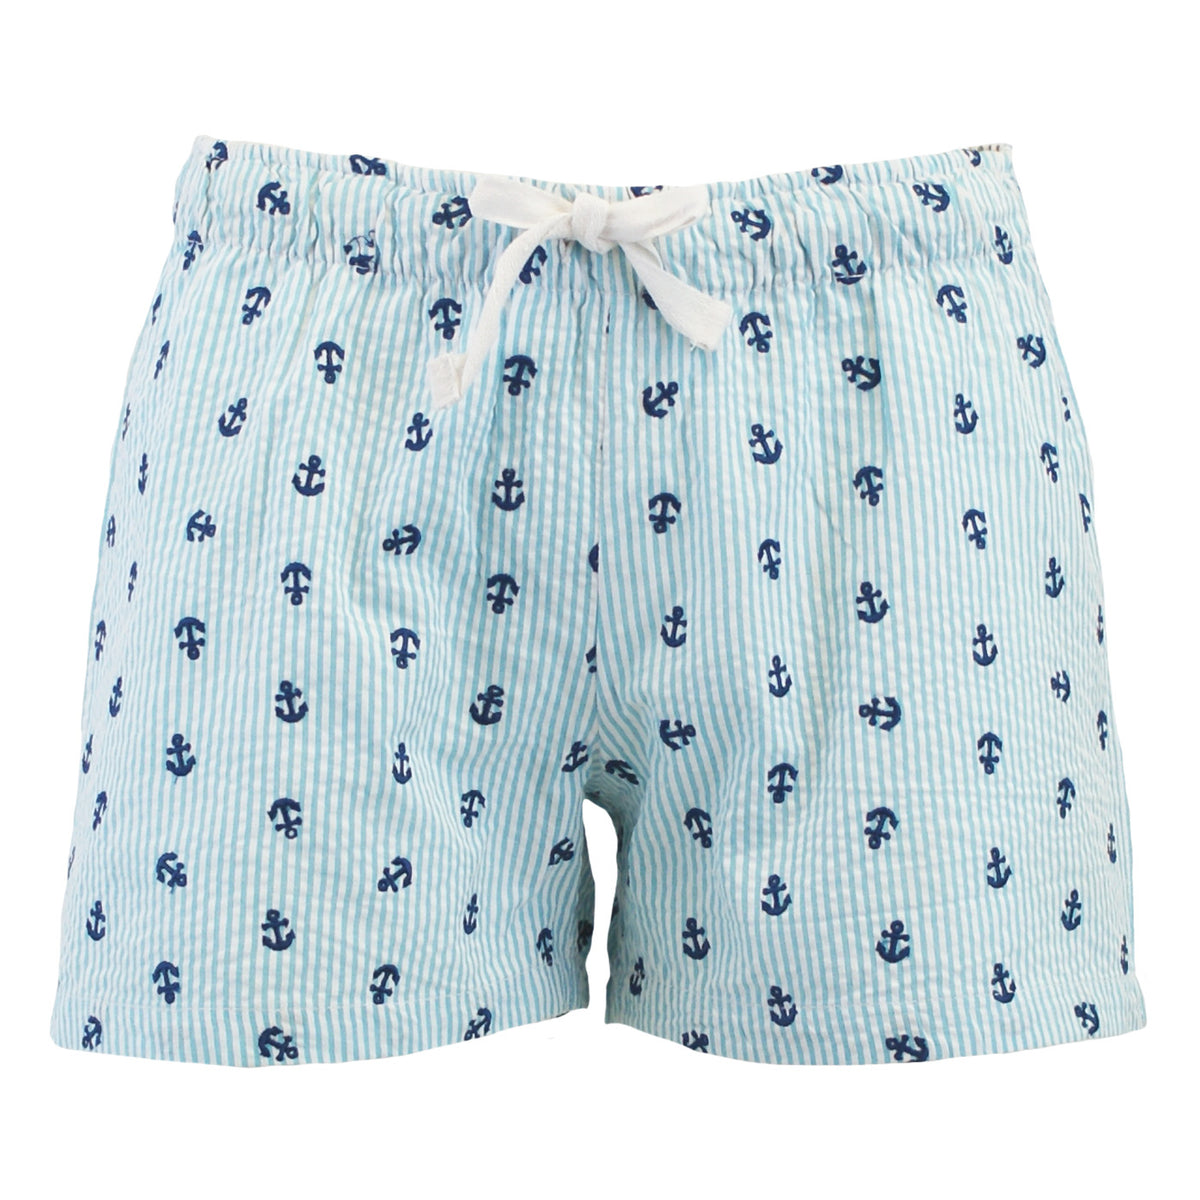 Seersucker Anchors Shorts - Lagoon Blue